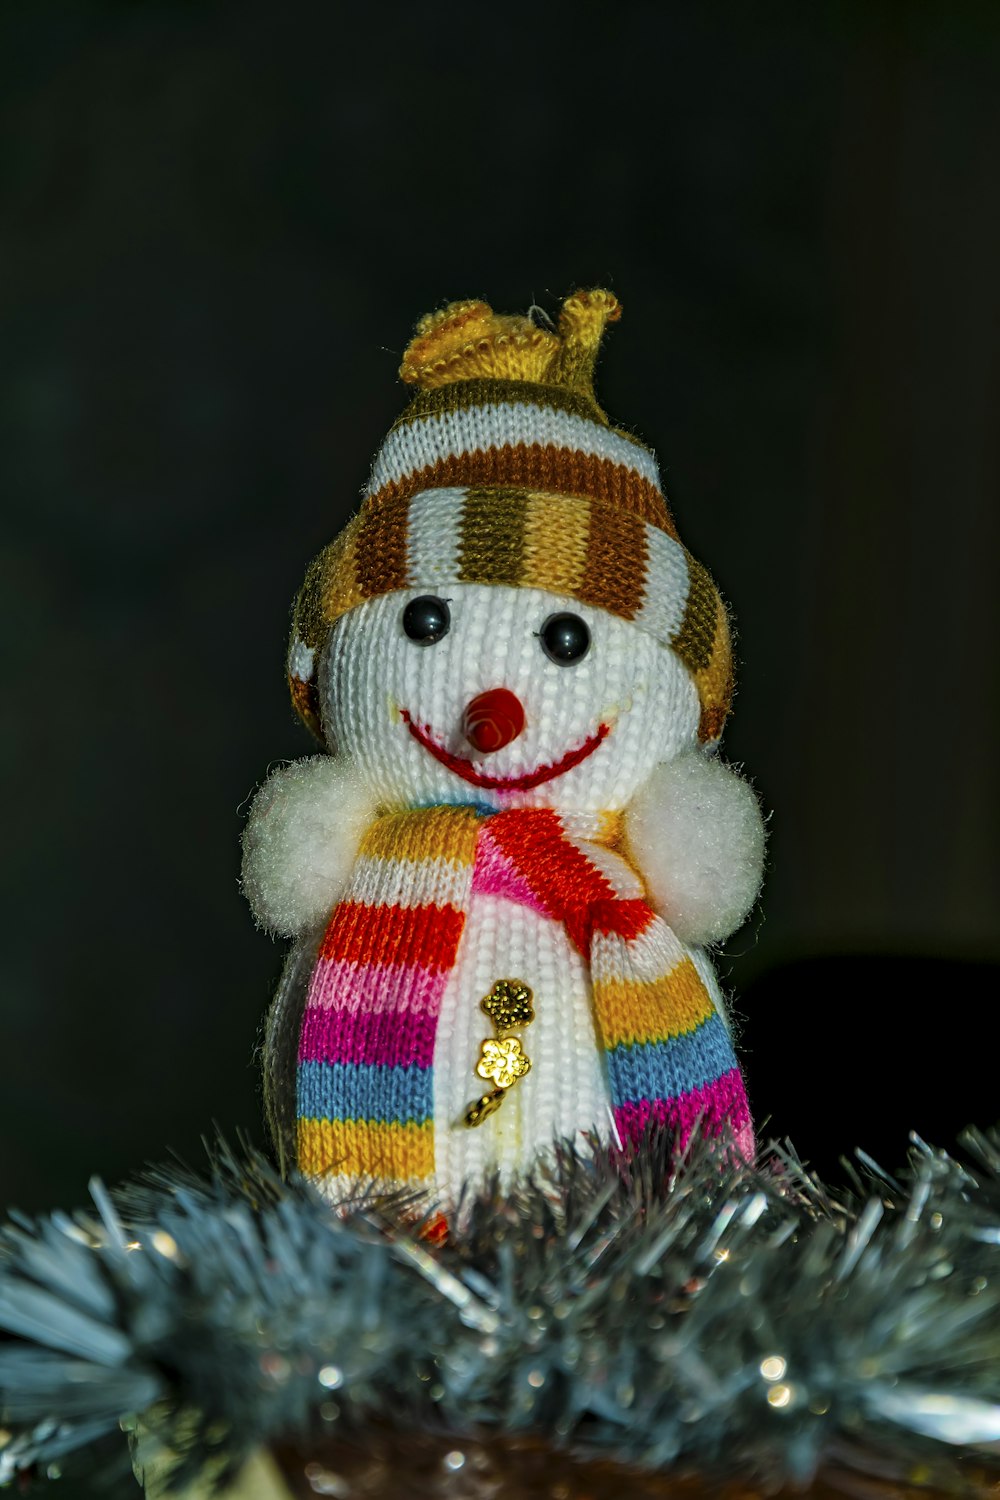 a snowman wearing a hat